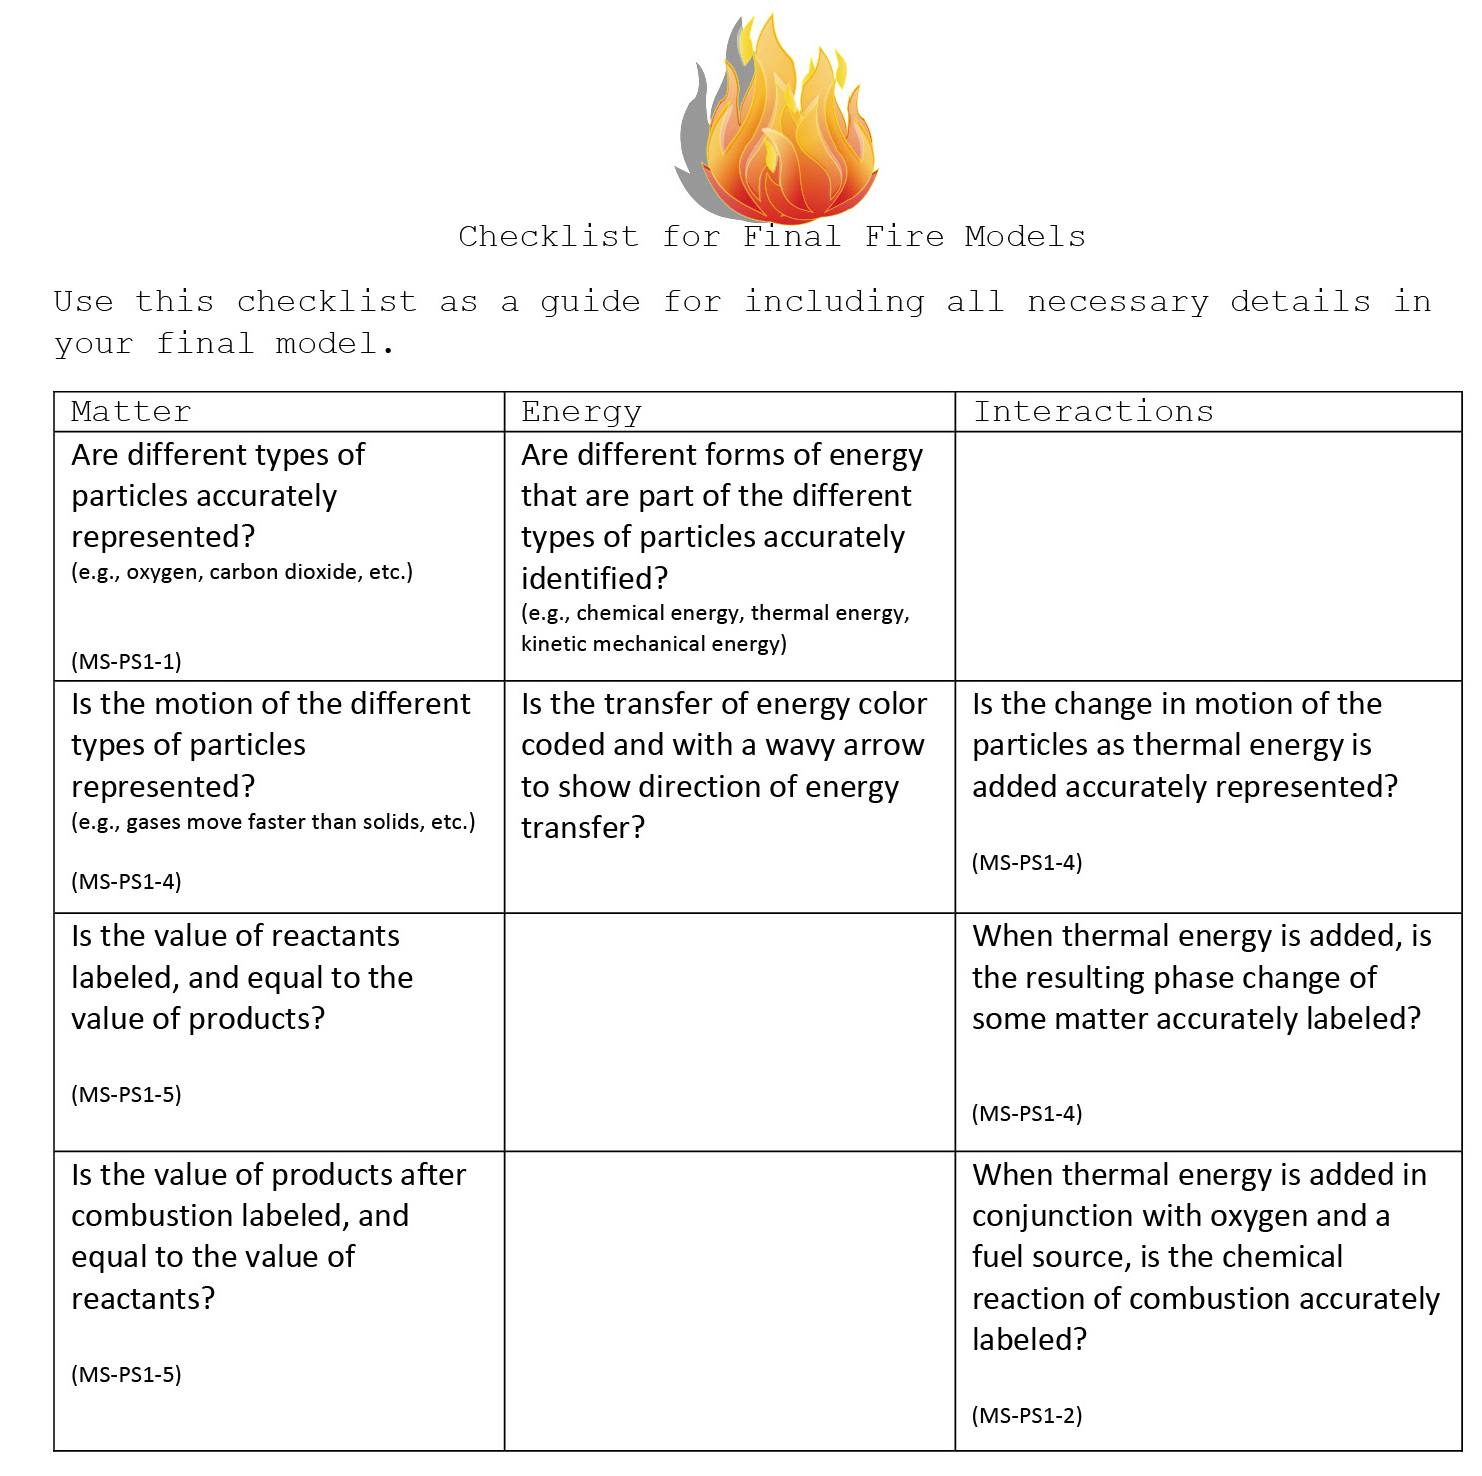 Figure 6 Checklist for final fire models.